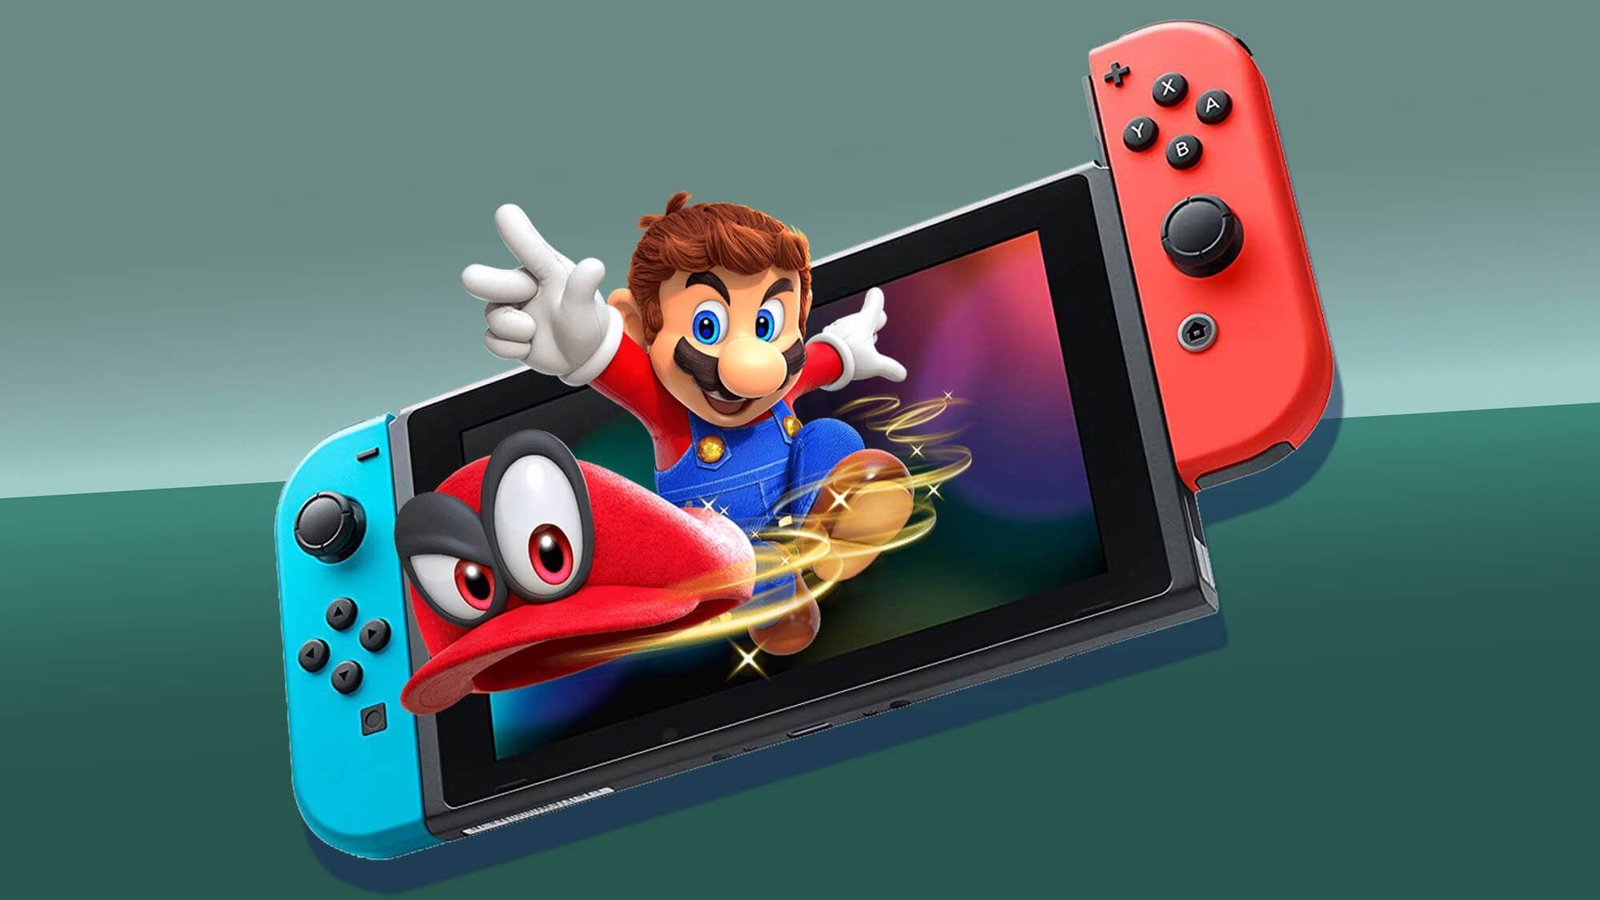 Nintendo divulga comercial promovendo o cross-save